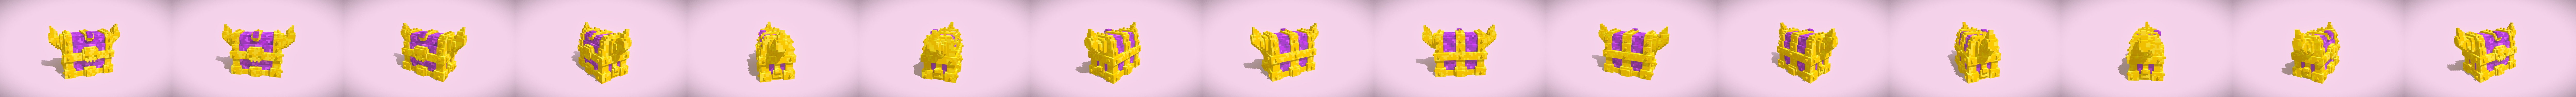 Pixel Art/Voxel Art (Minecraft Ender Chest) - Download Free 3D